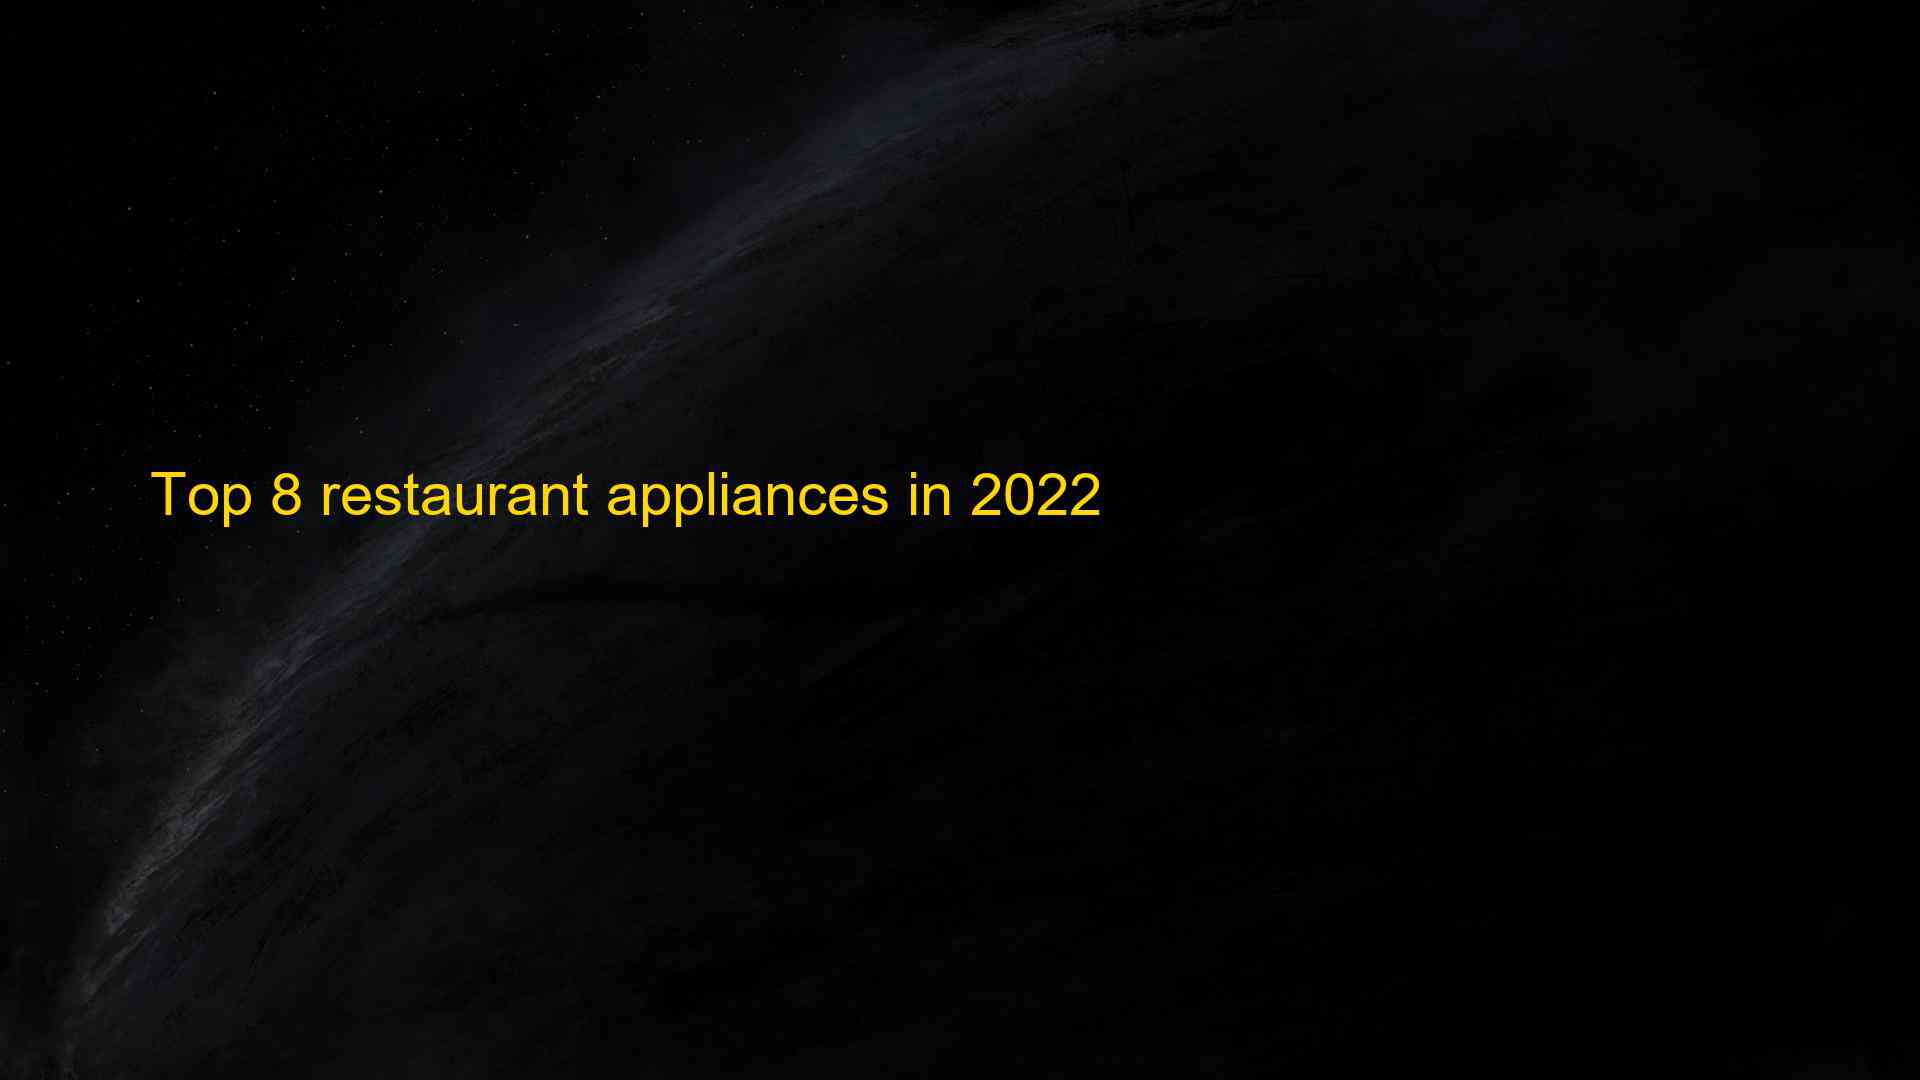 Top 8 restaurant appliances in 2022 1663386727